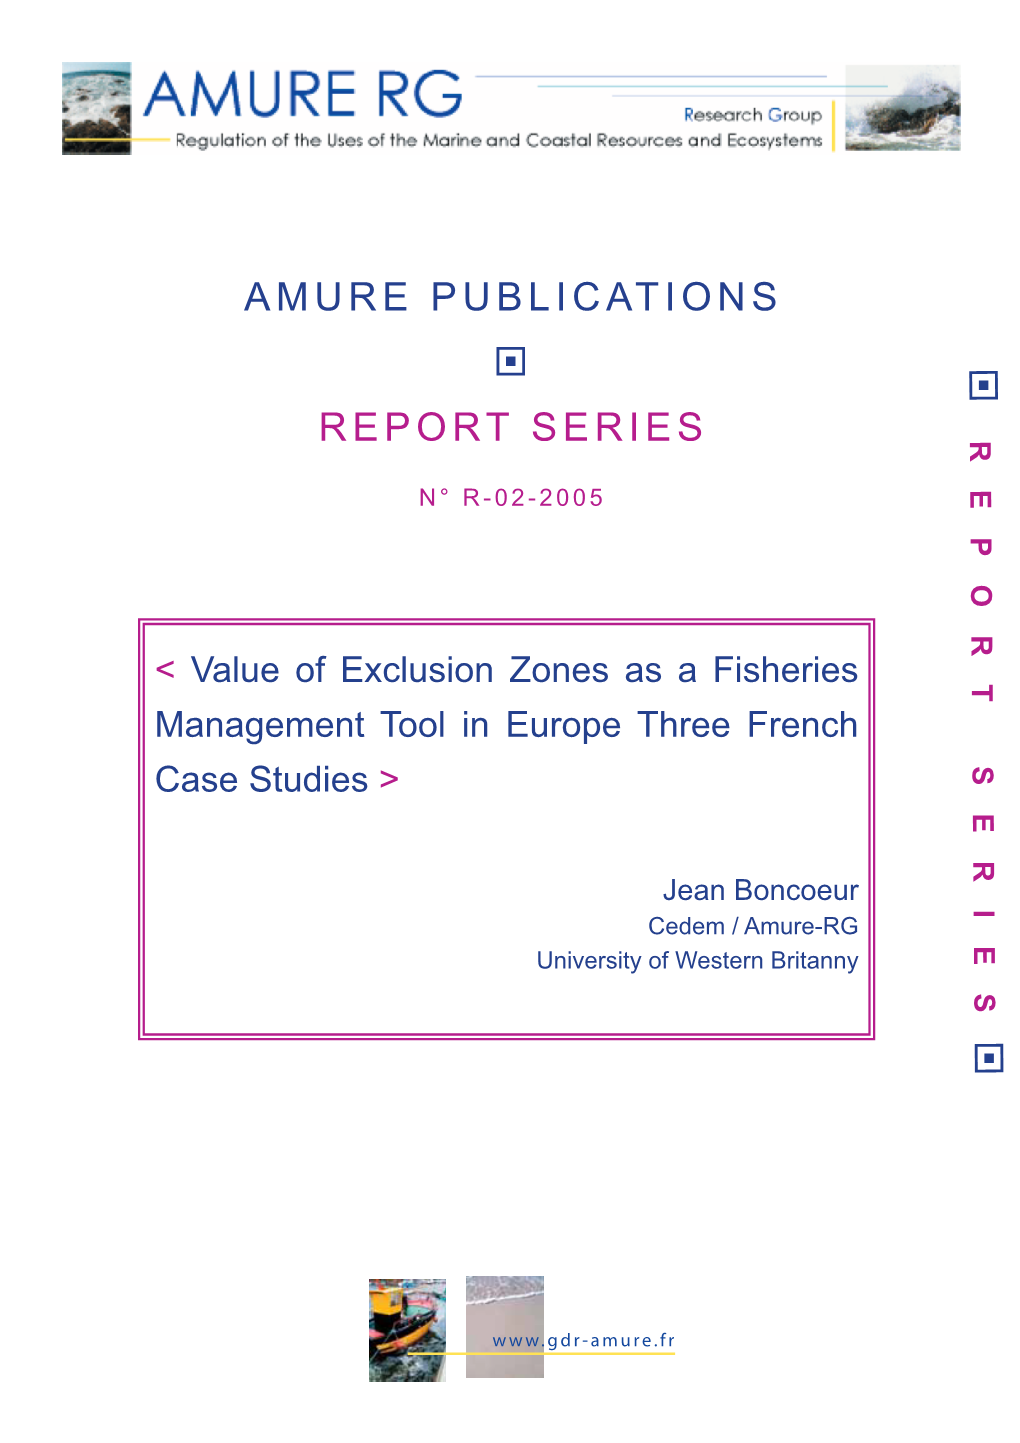 Amure Publications Report Series